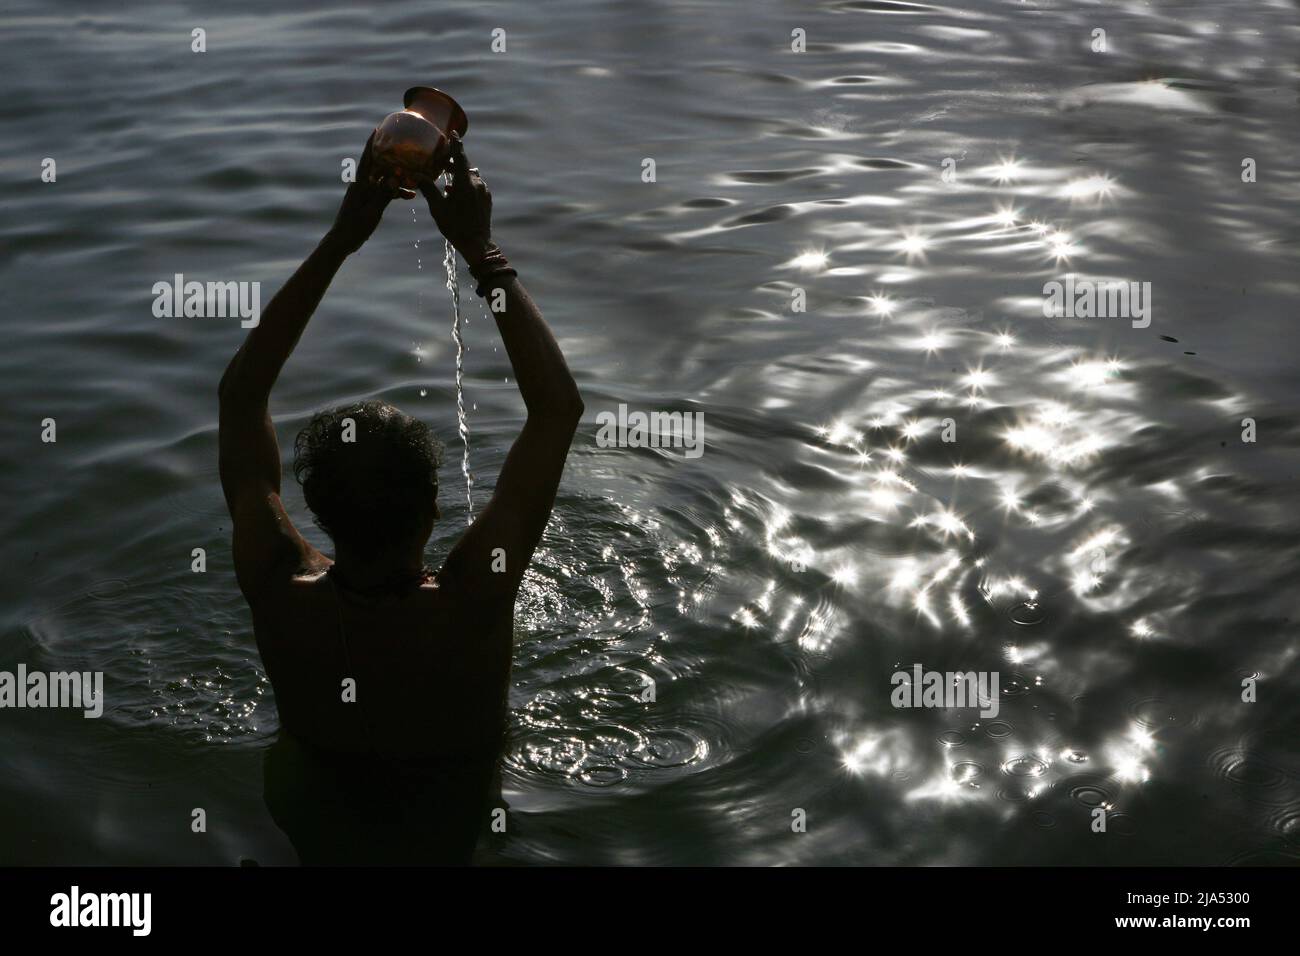 India, Uttar Pradesh, Benares (Varanasi). Ablutions and Hindu religious rituals on the banks of the Ganges river Stock Photo